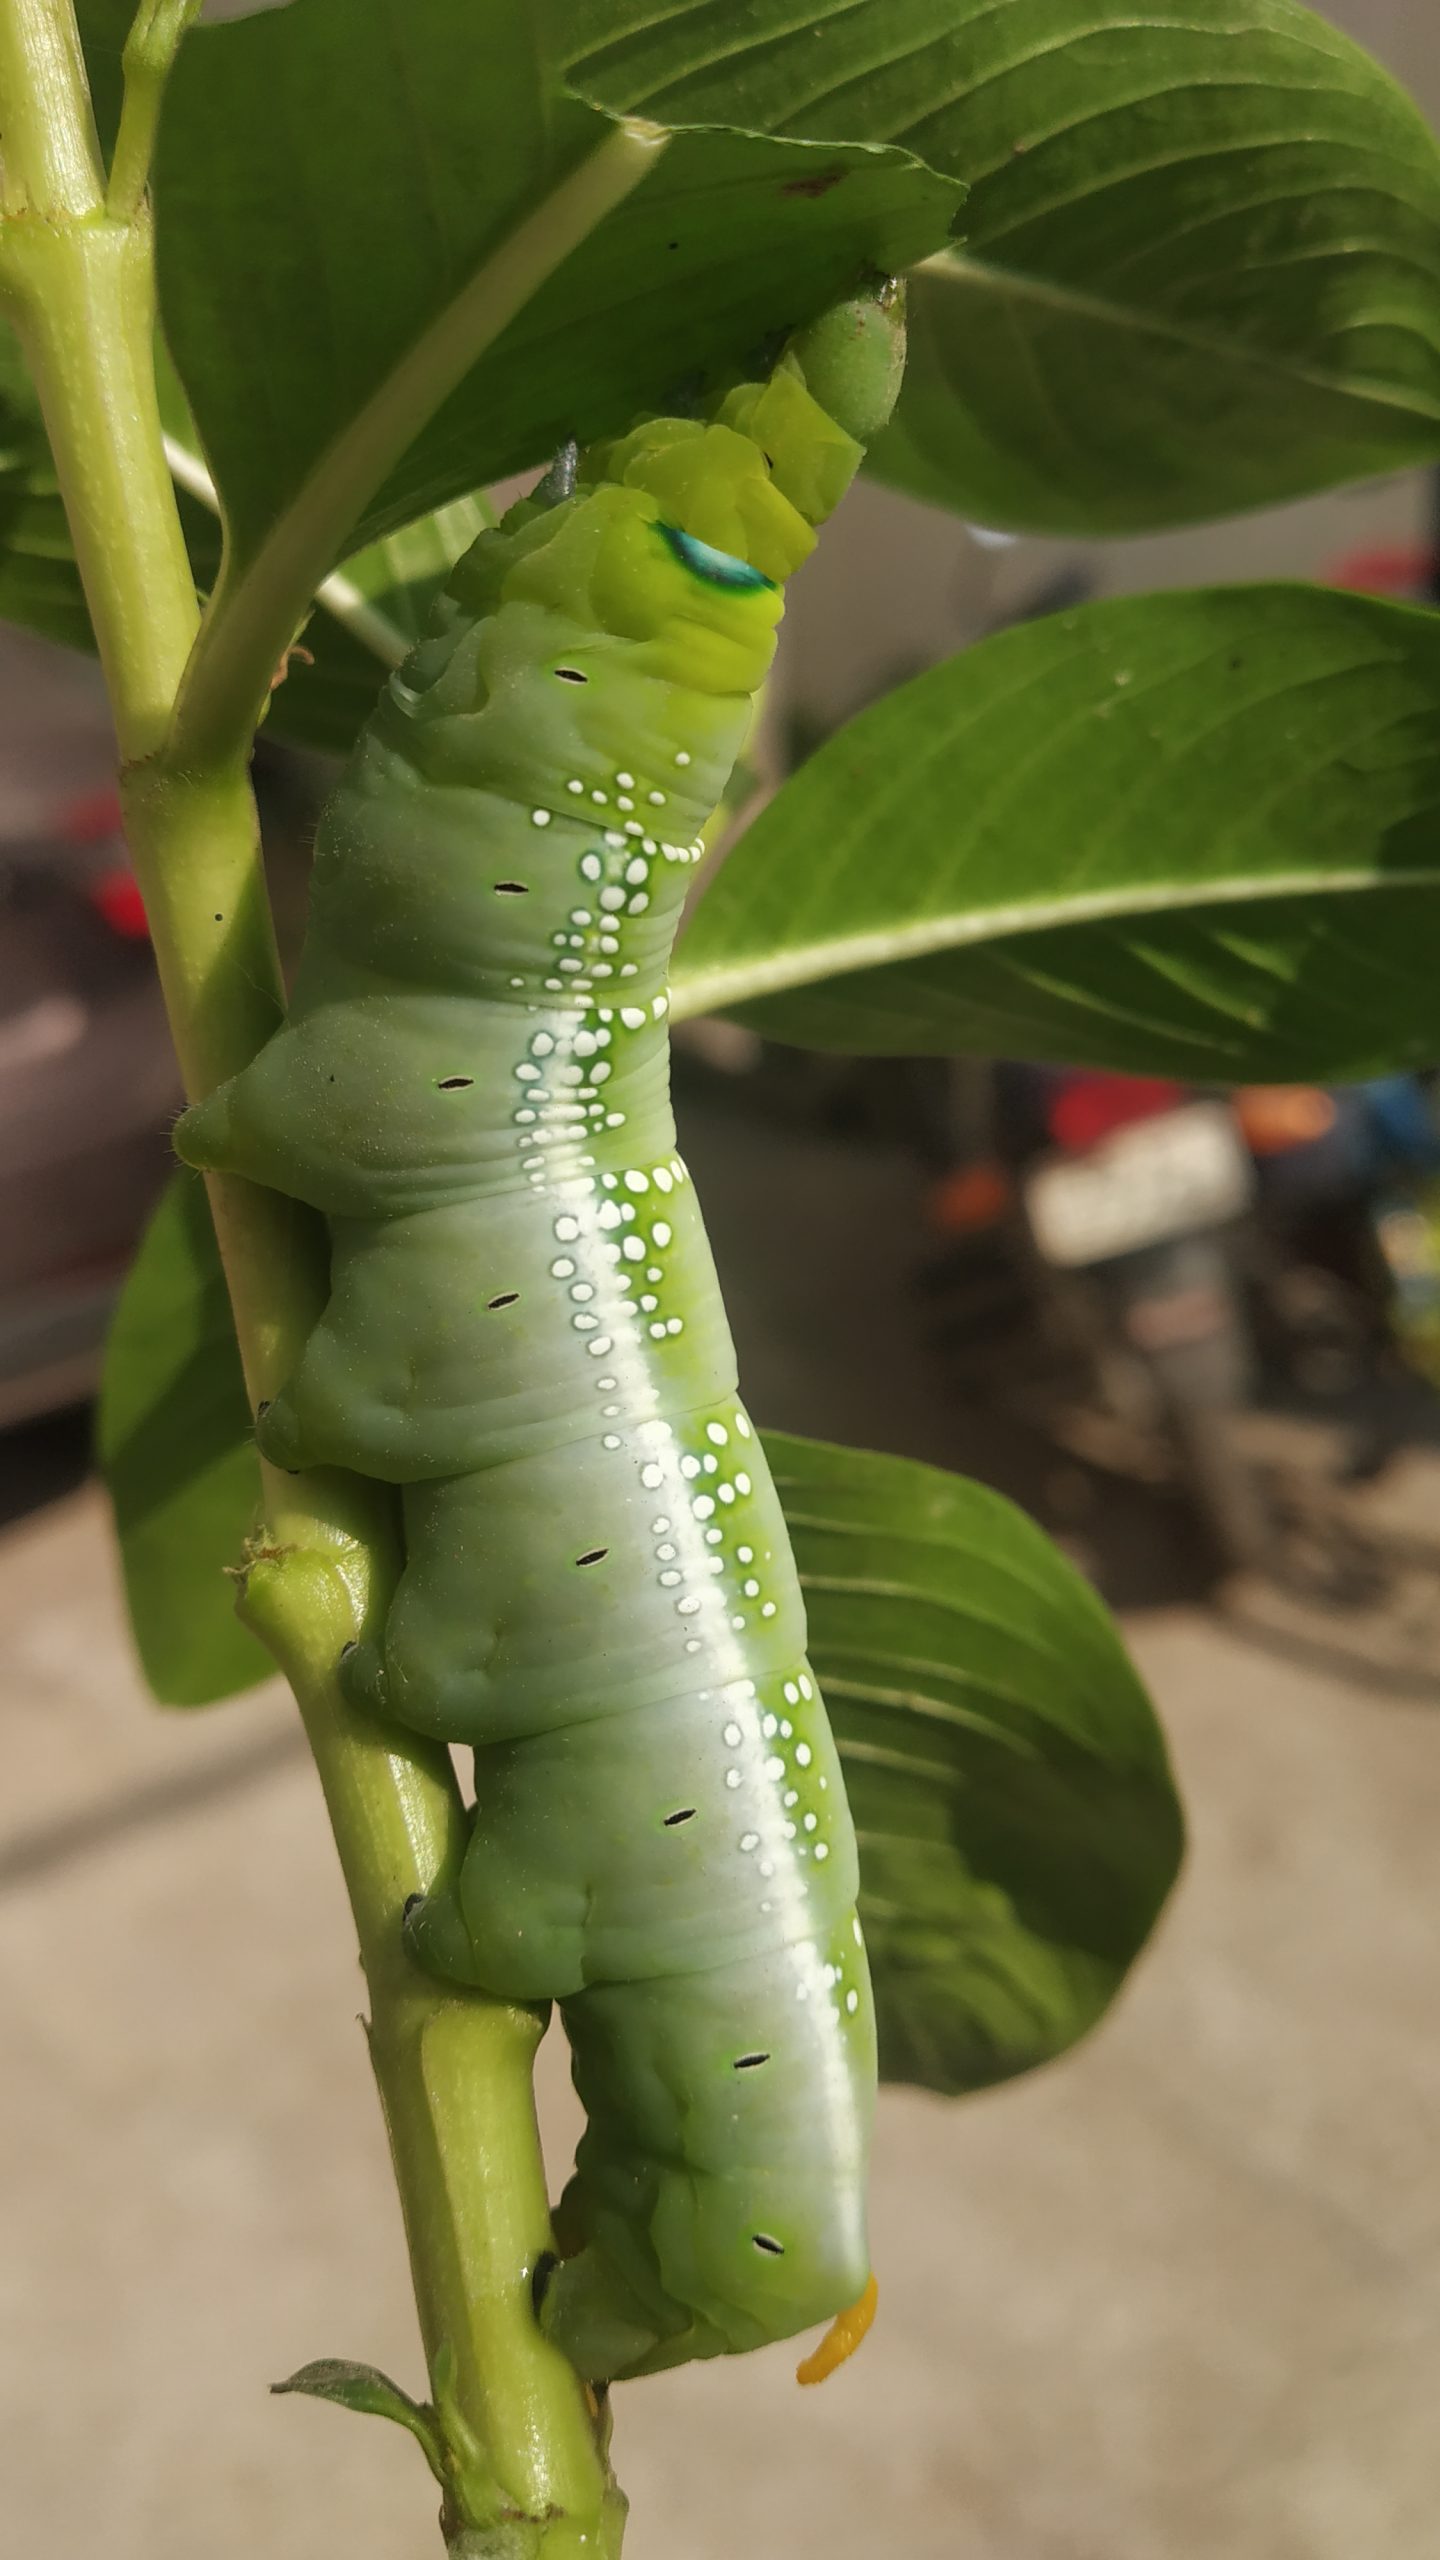 Caterpillar on Plant stem